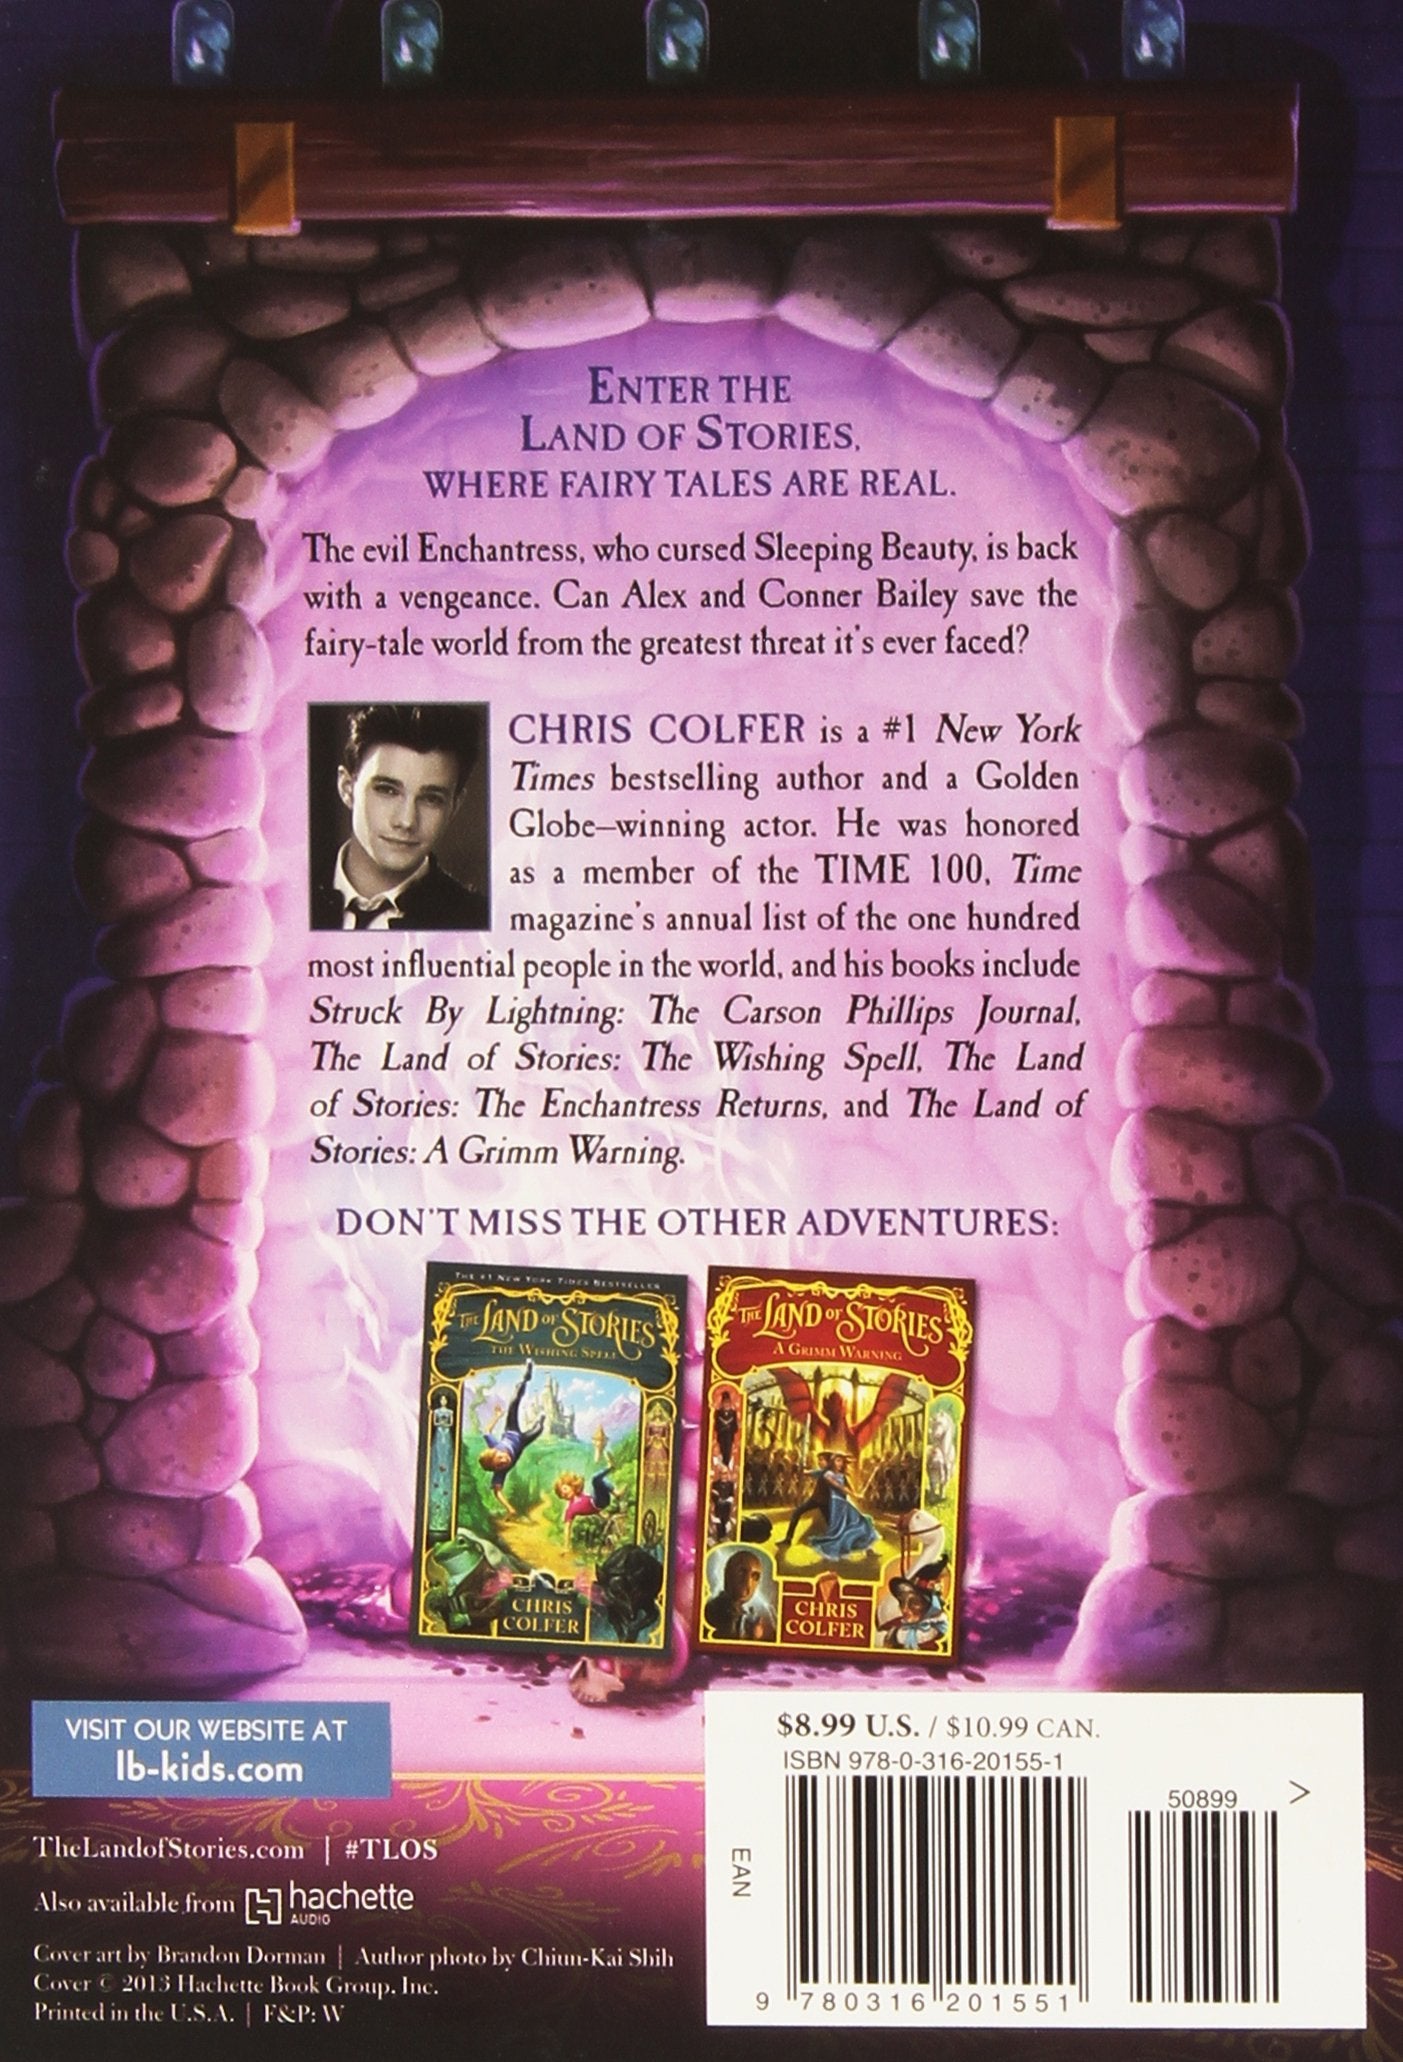 The Land of Stories Book 2 The Enchantress Returns - D'Autores